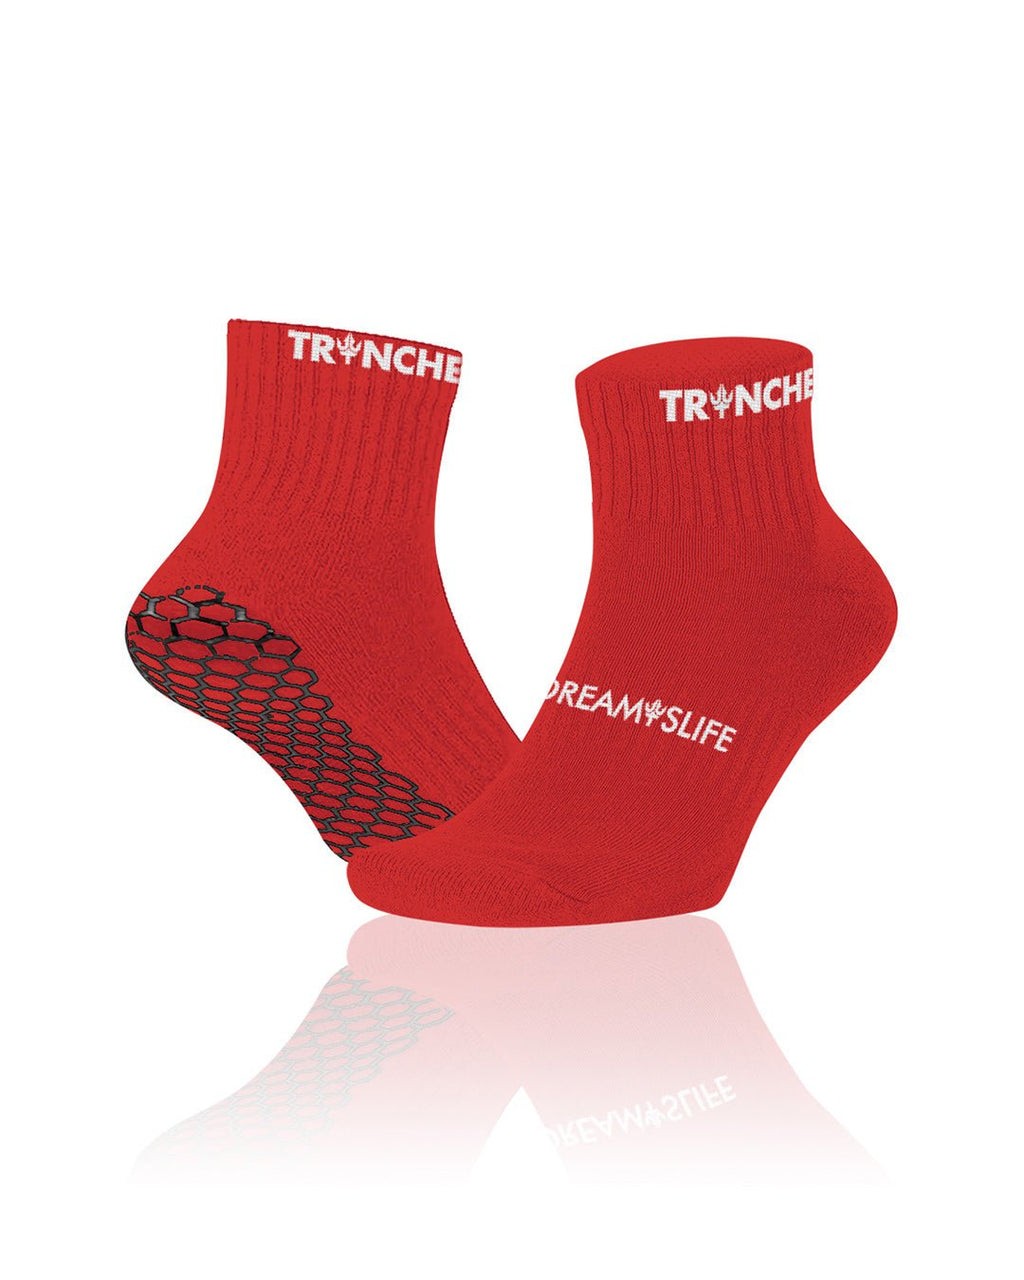 Trinche Non-Slip Stockings - Improve your performance in sports